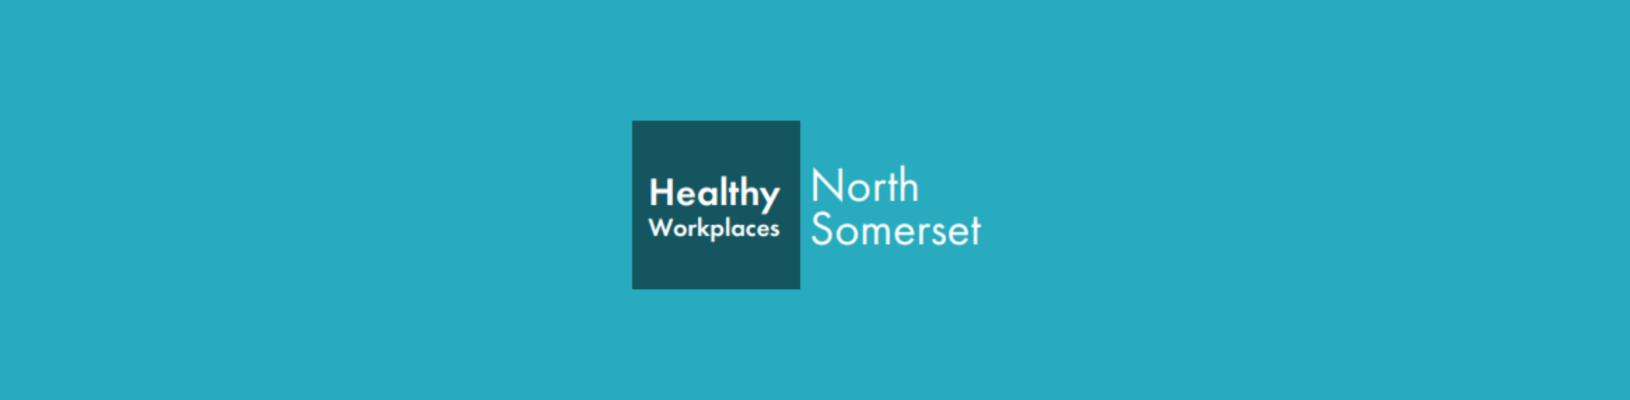 Health workplaces north somerset logo